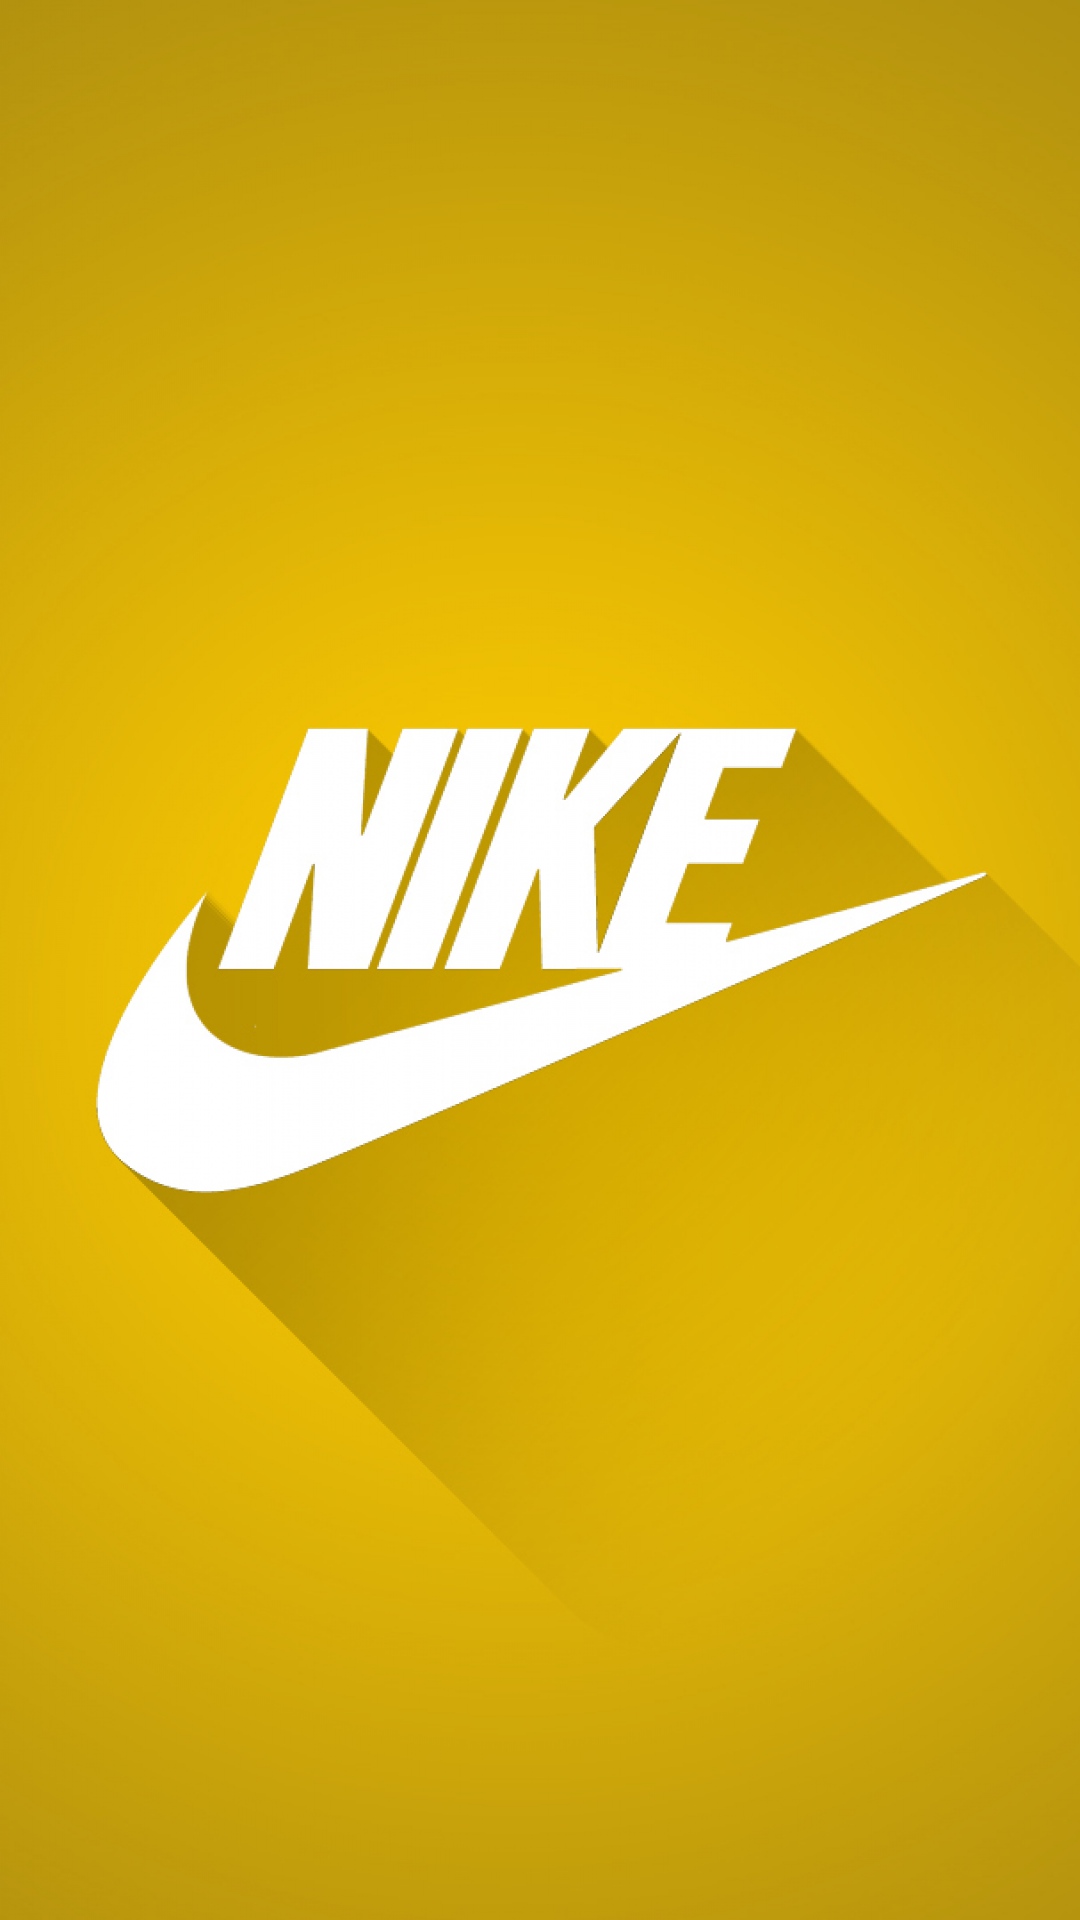 Download Free Nike Wallpapers For Iphone Pixelstalk Net